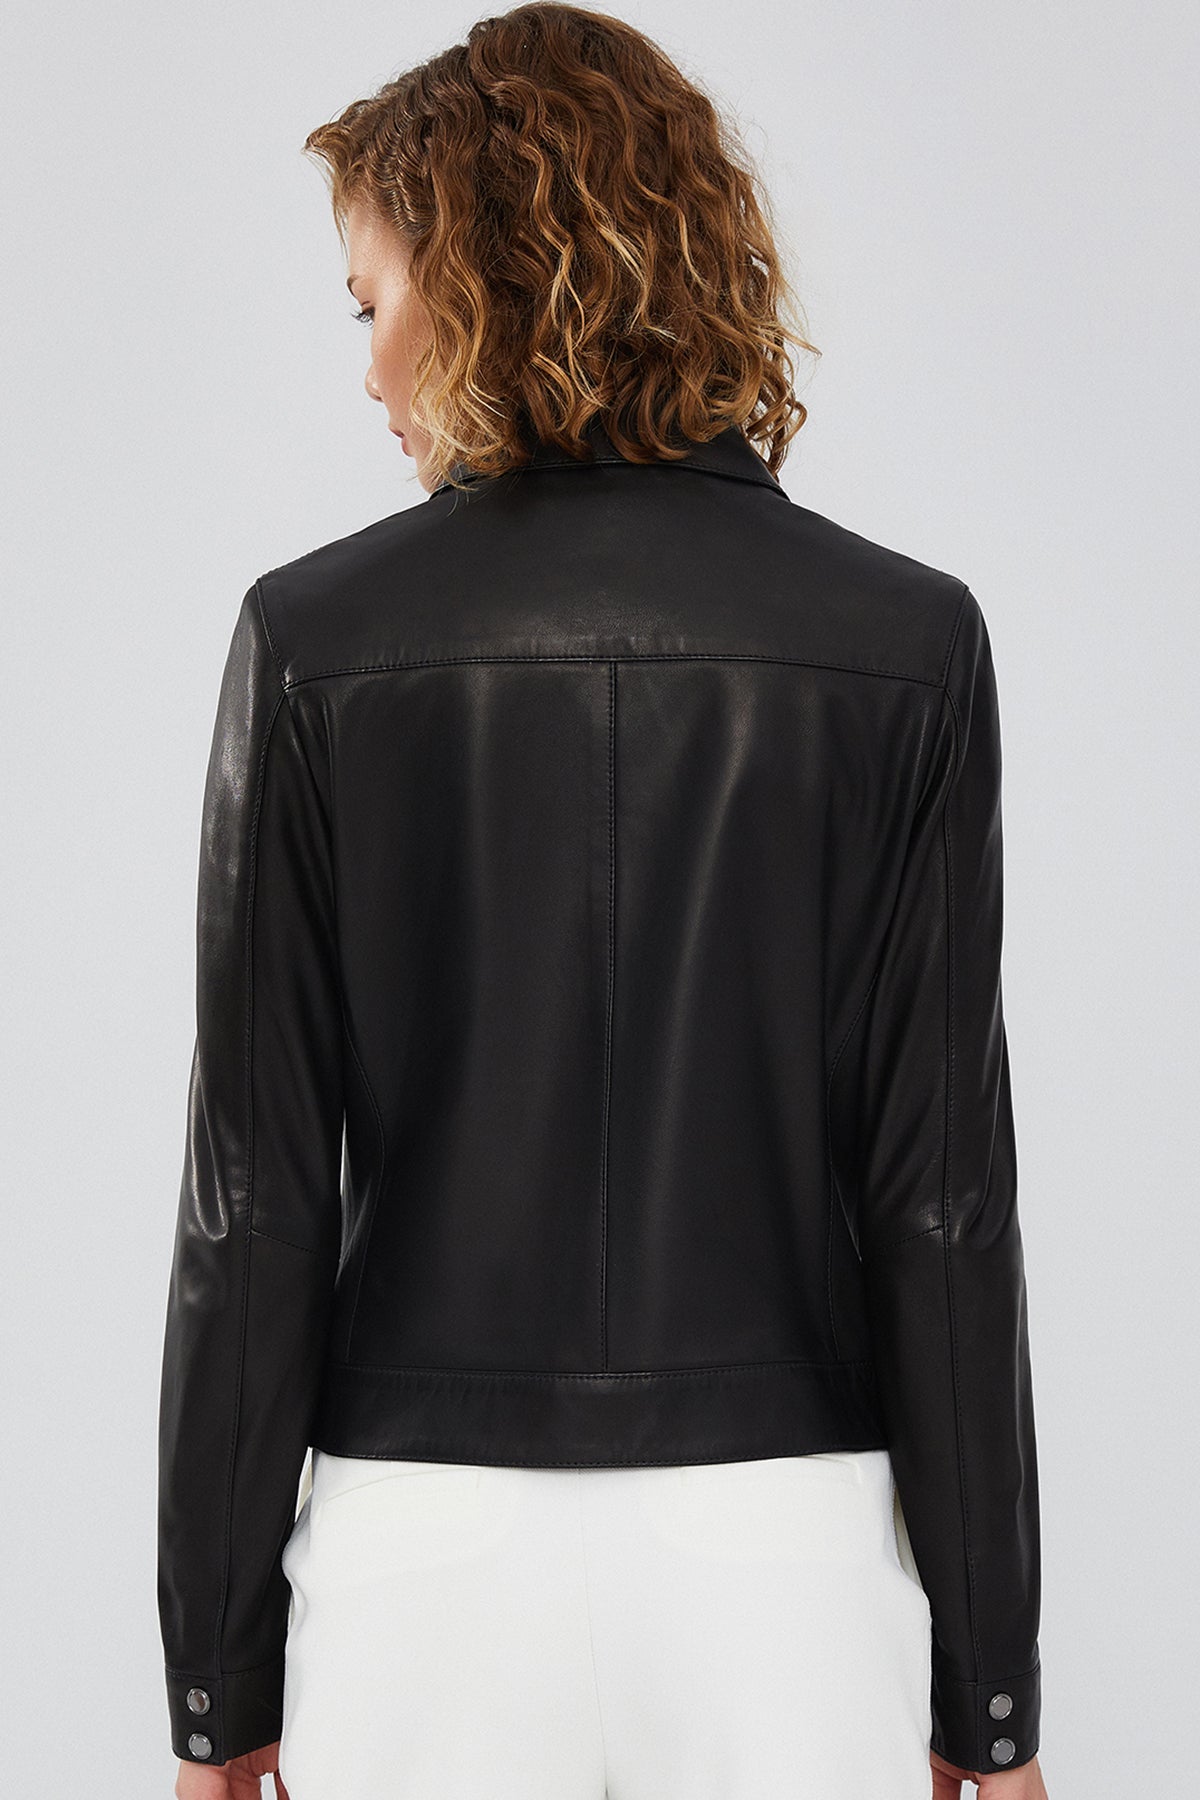 Olympia Women's Black Leather Jacket